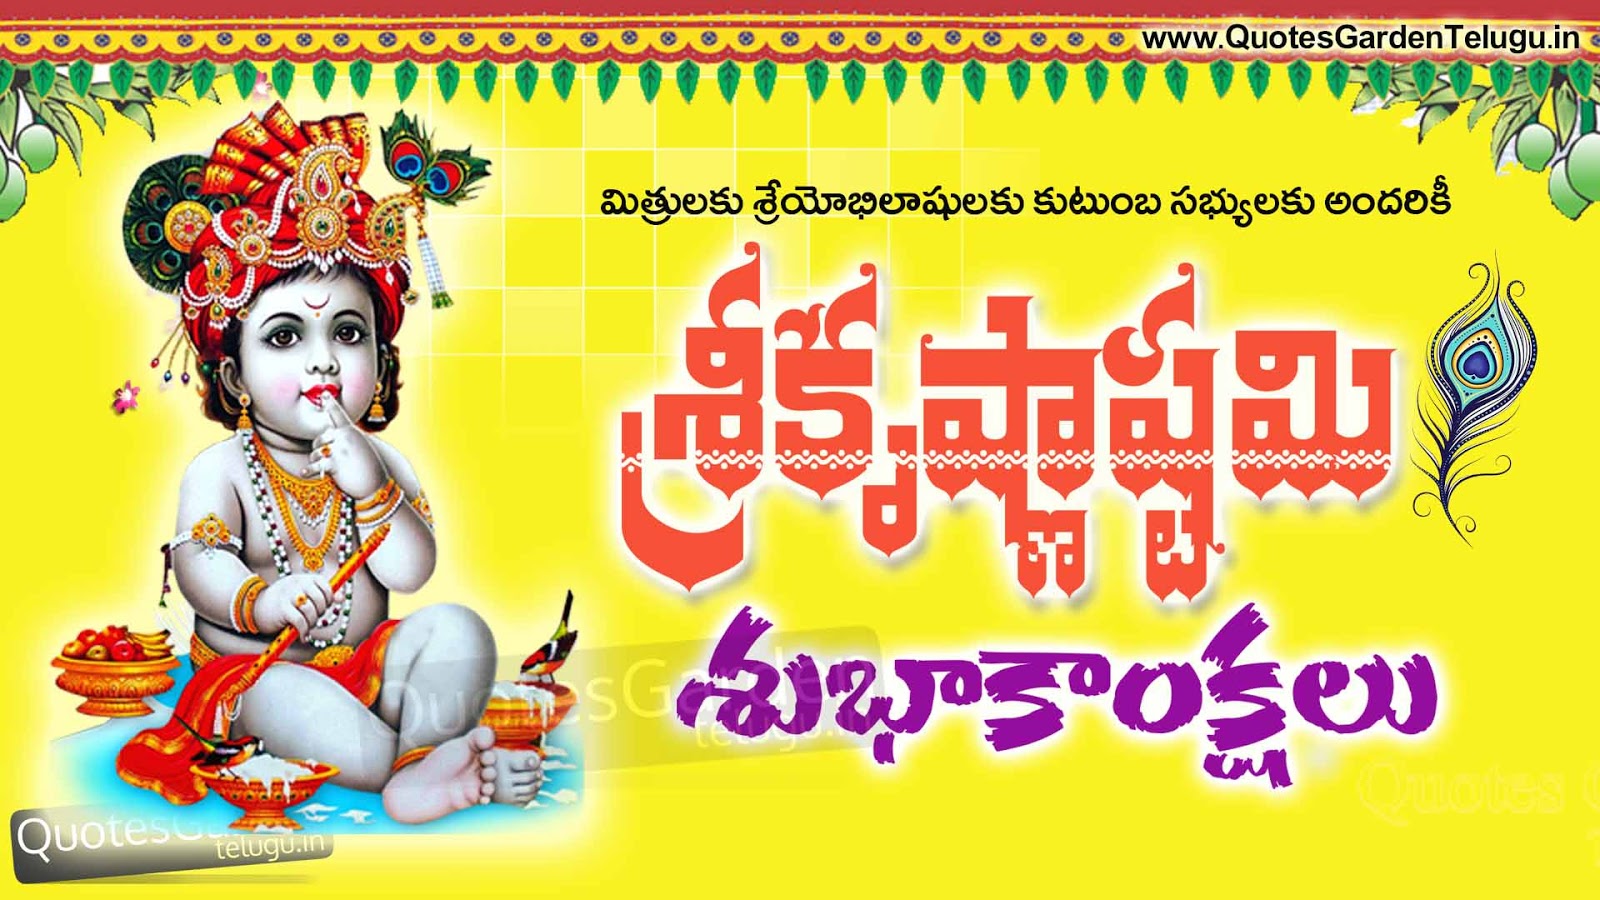 Krishnaashtami 2017 Telugu Greetings png wallpapers free download | QUOTES  GARDEN TELUGU | Telugu Quotes | English Quotes | Hindi Quotes |